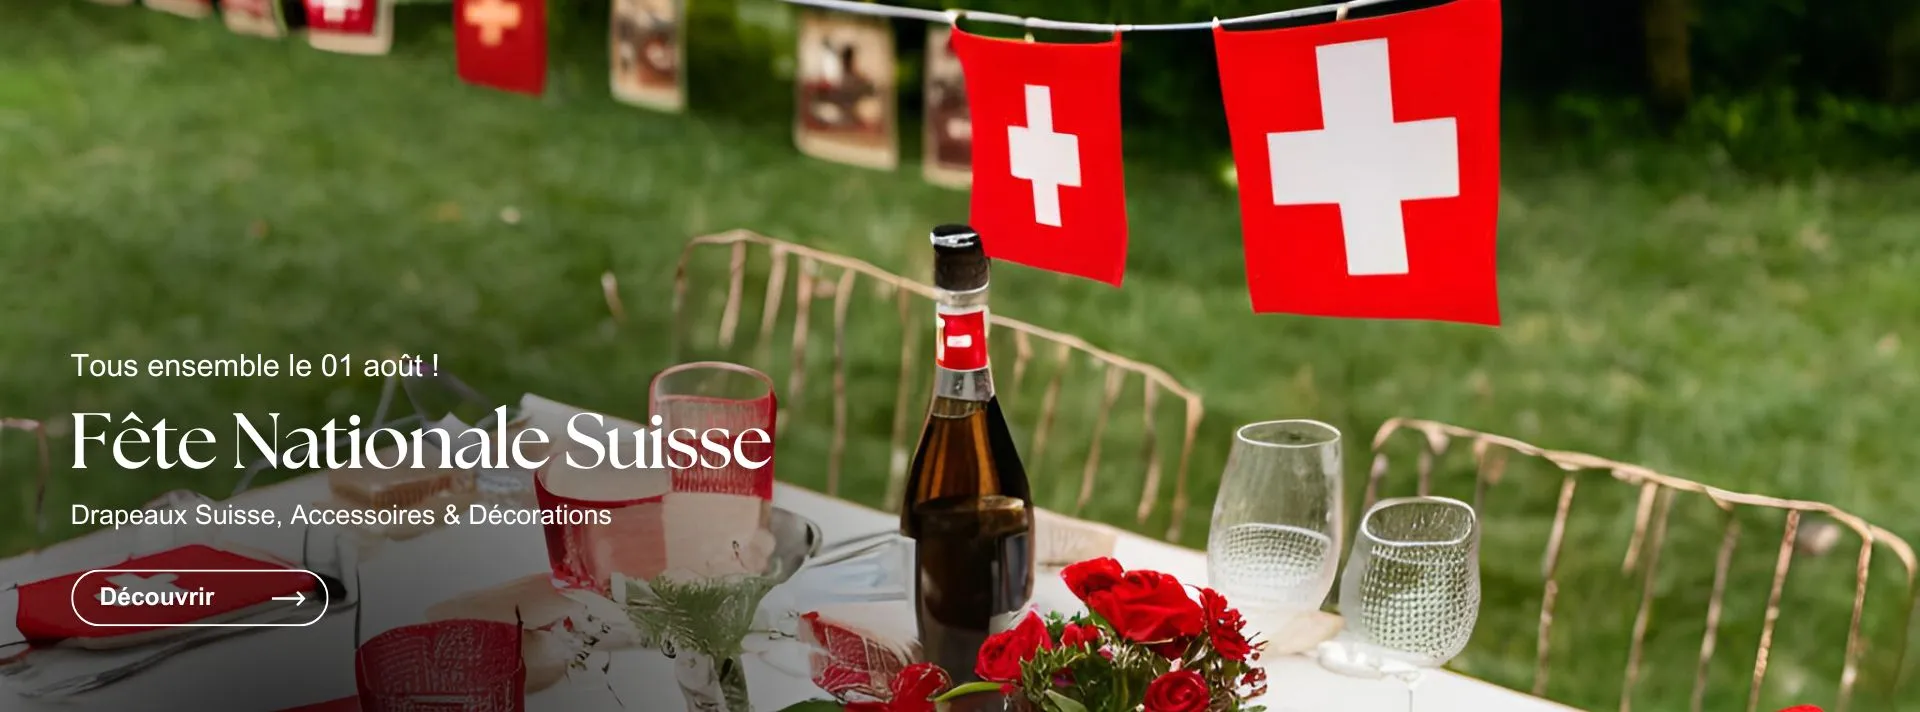 1er aout fête nationale suisse